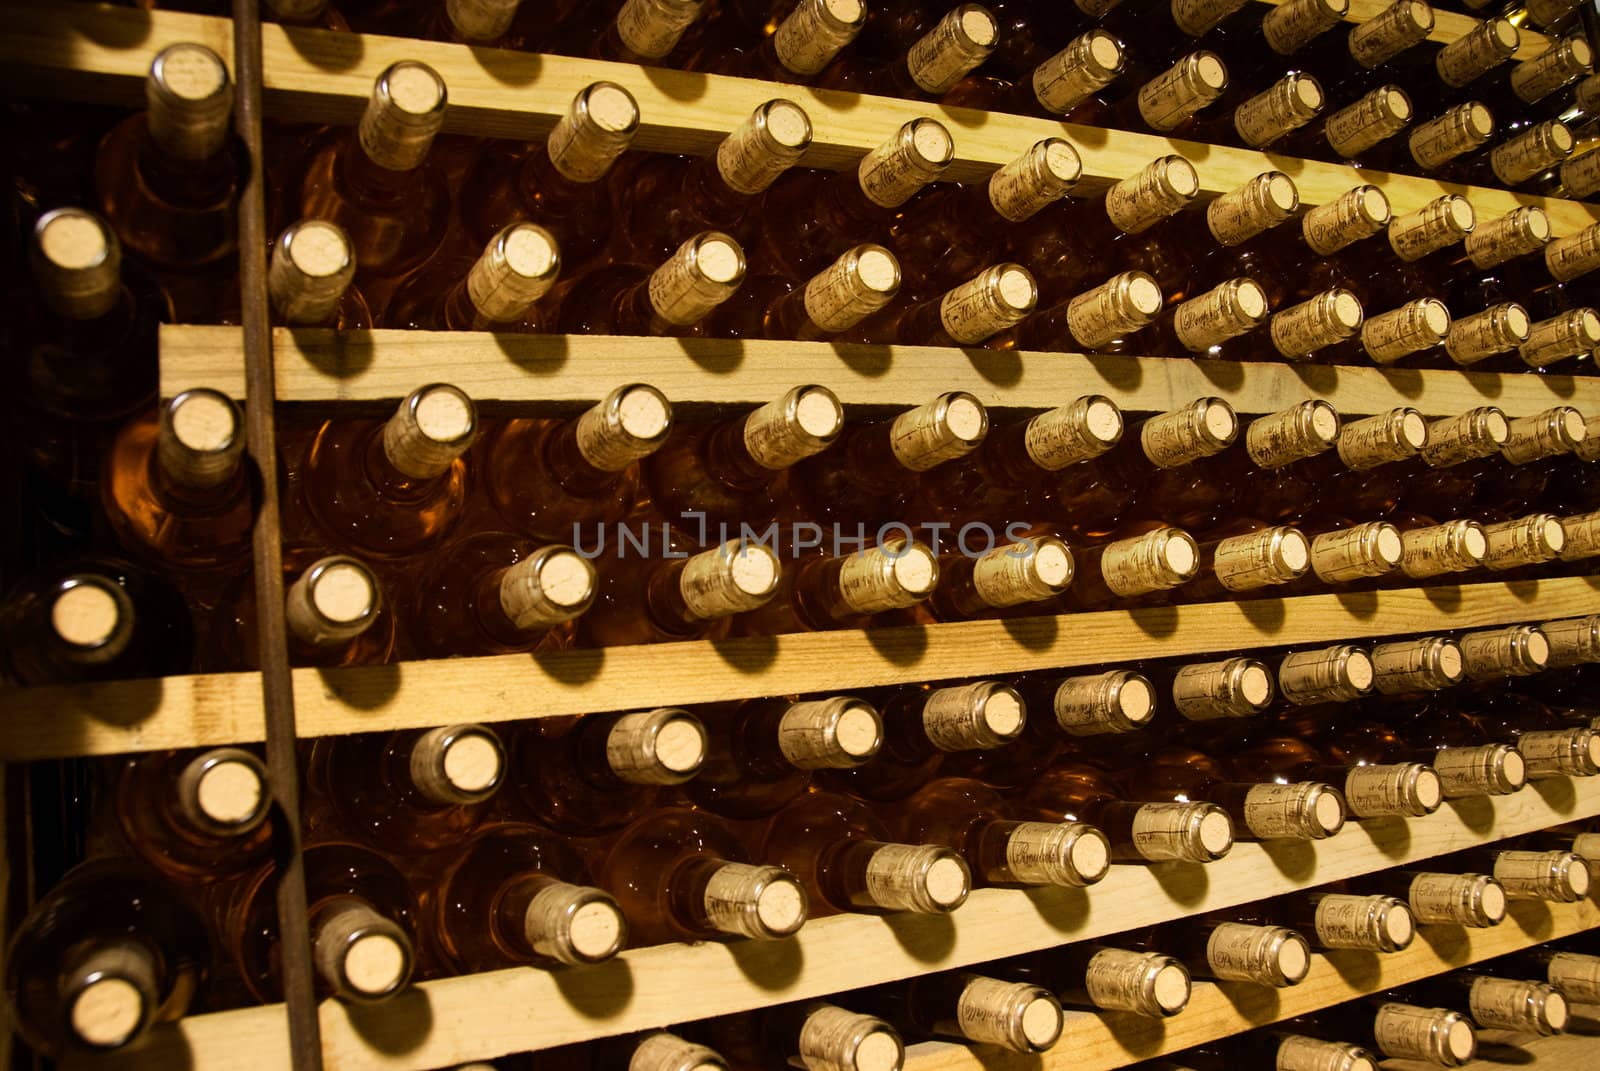 White Wine bottles by ACMPhoto